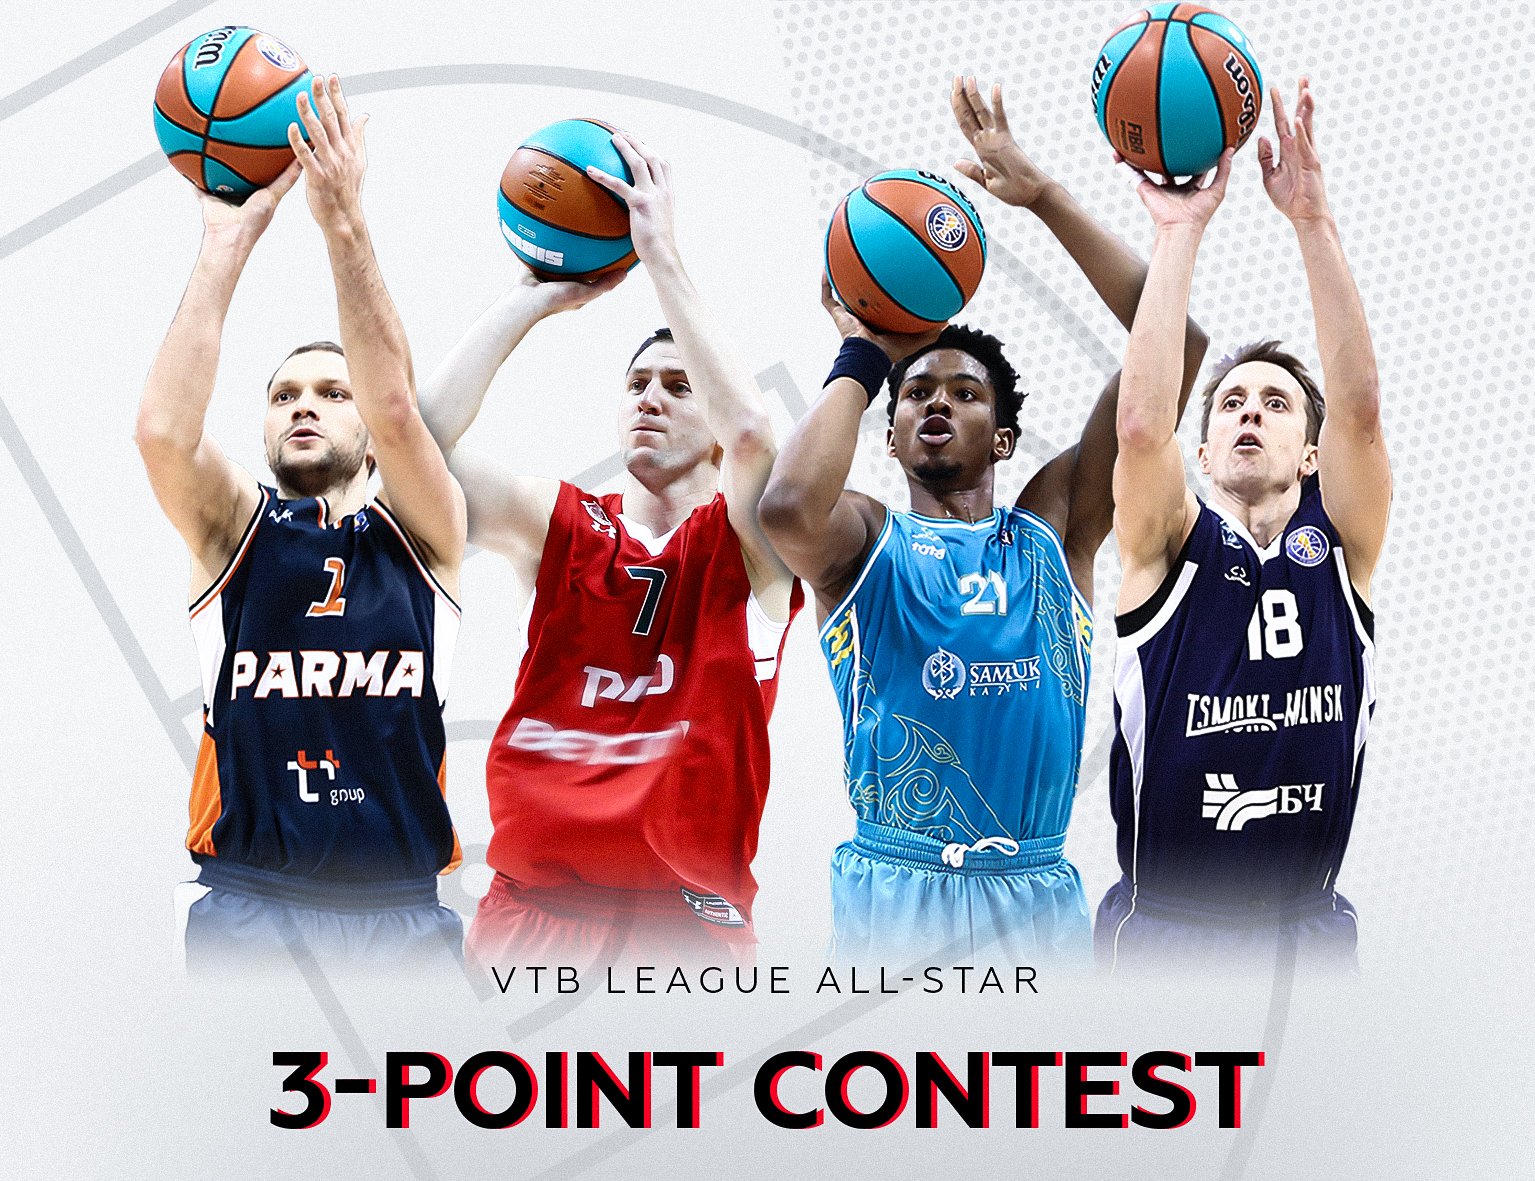 Maxim Grigoryev, Vitaly Fridzon, Malcolm Hill and Branko Mirkovic are 3-point shootout contest participants